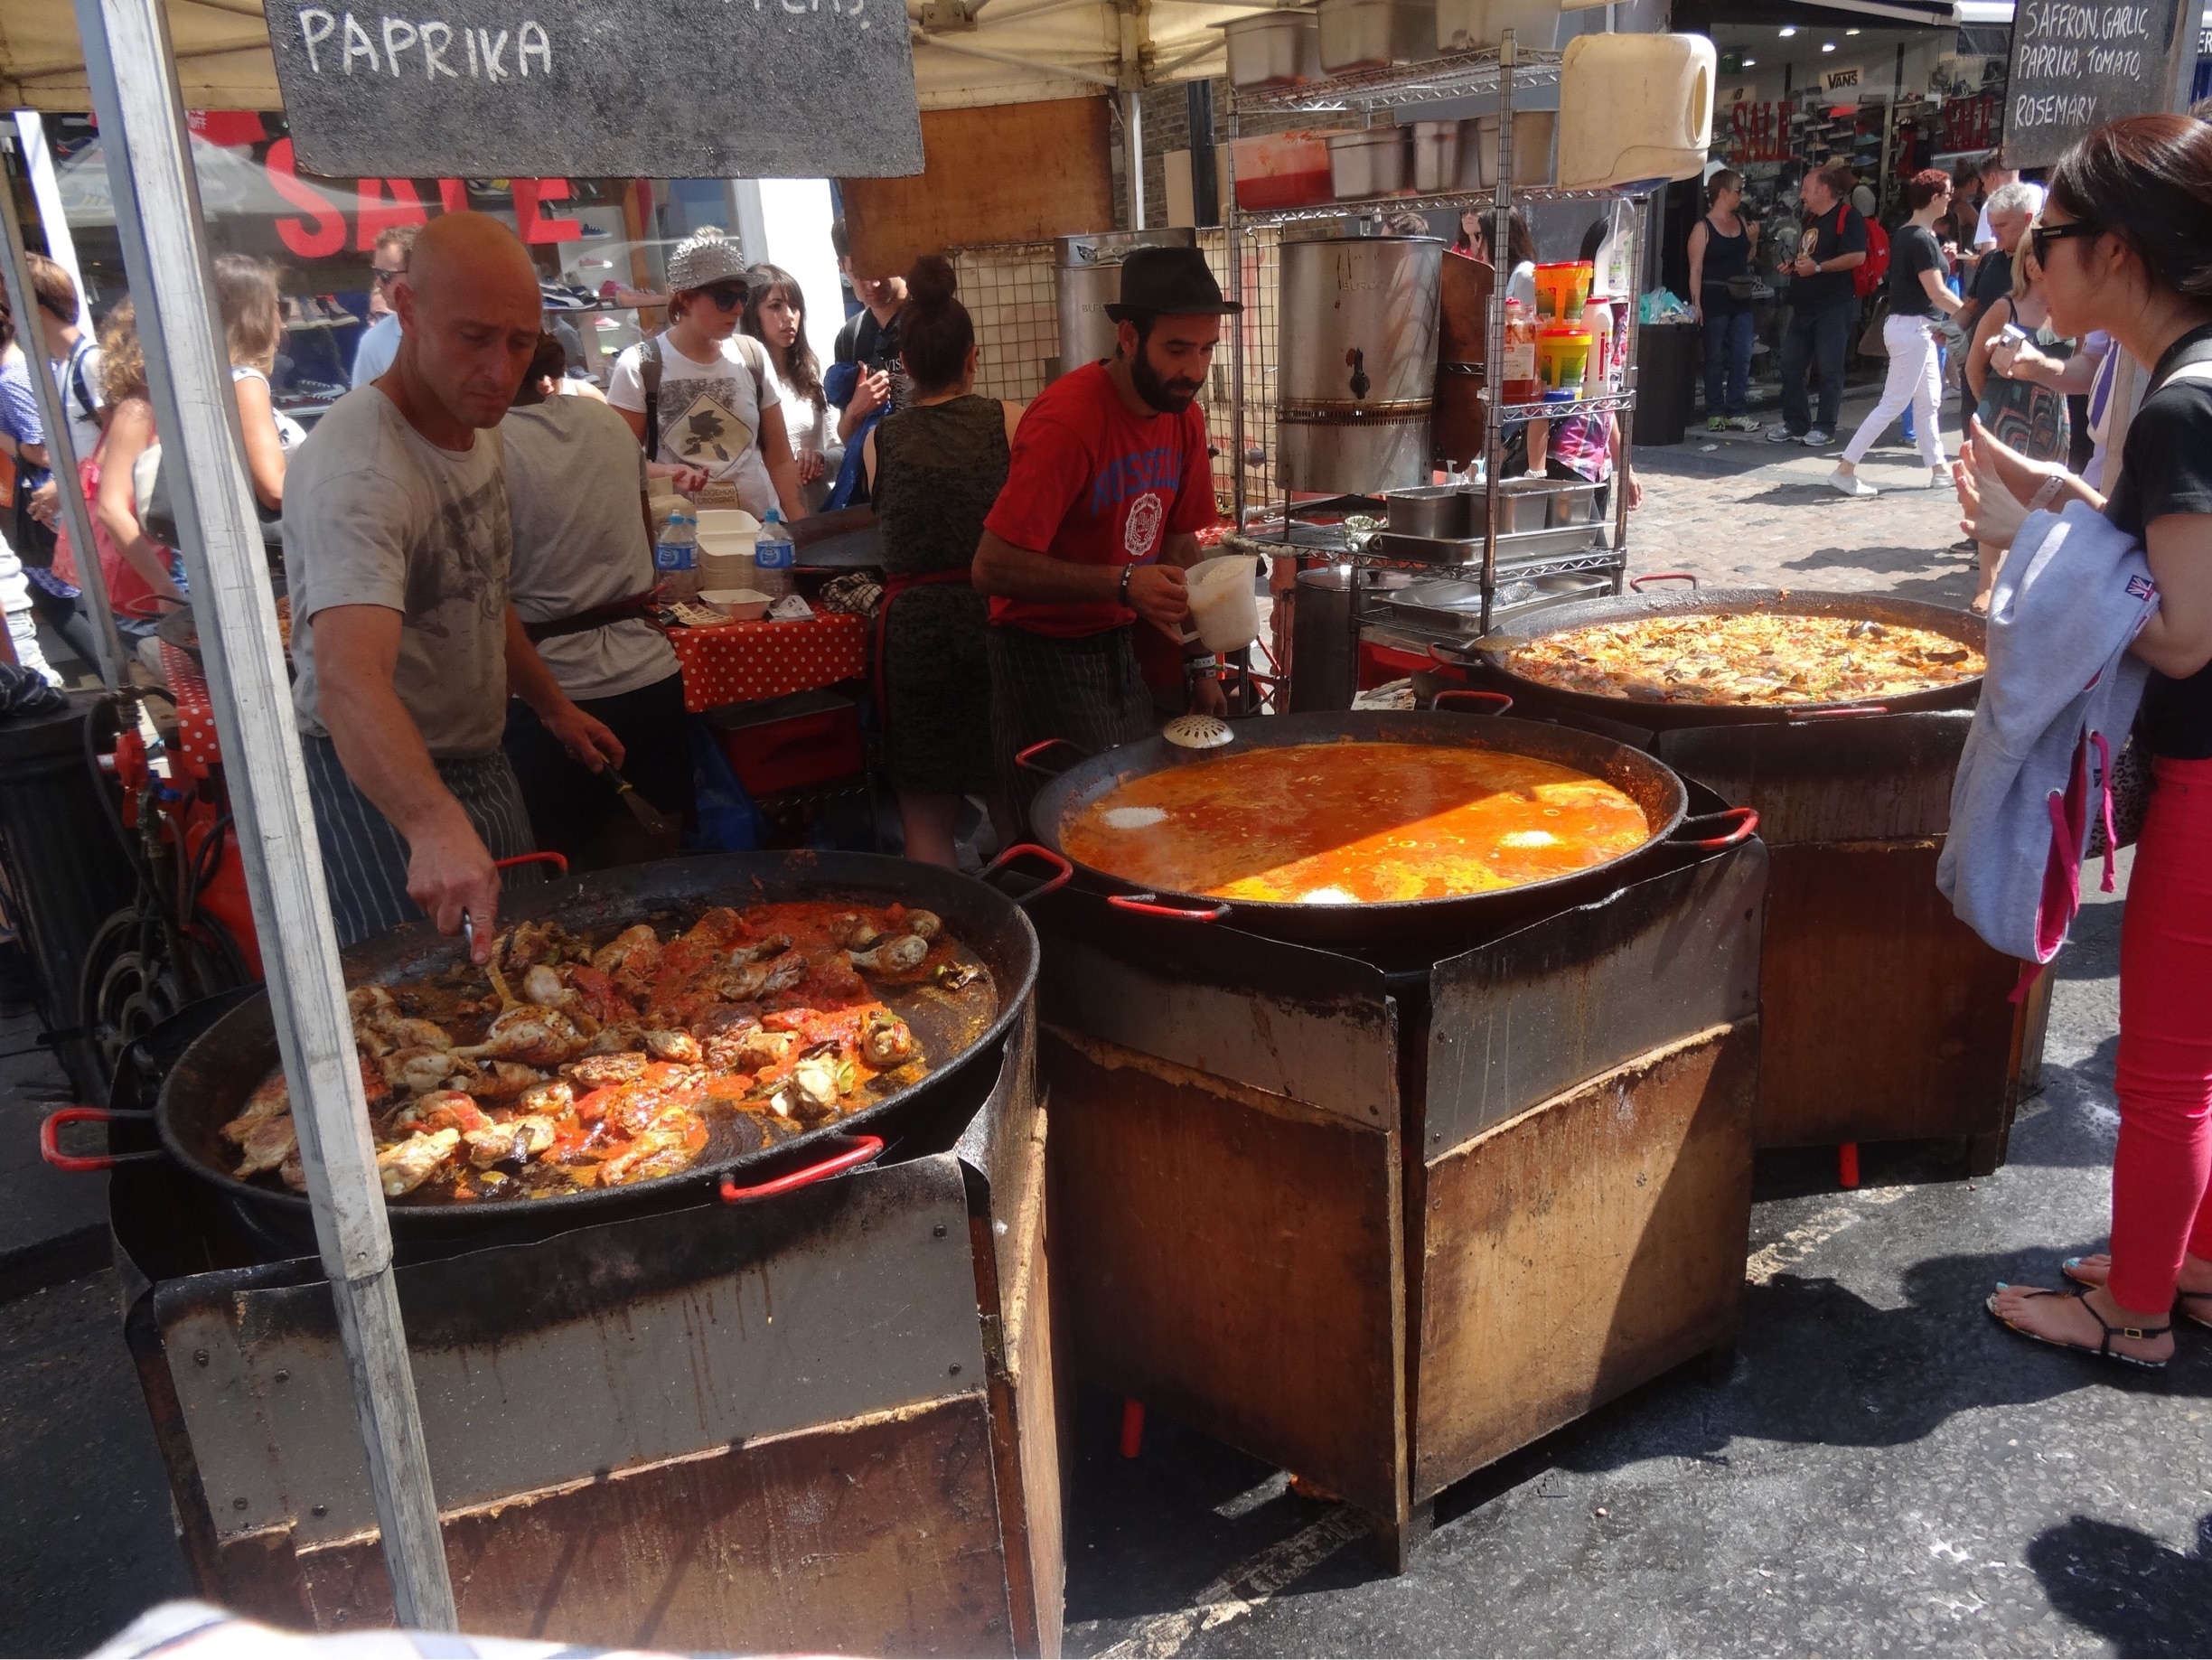 17 Best Markets in Paris for Food, Antiques and Bric-à-Brac